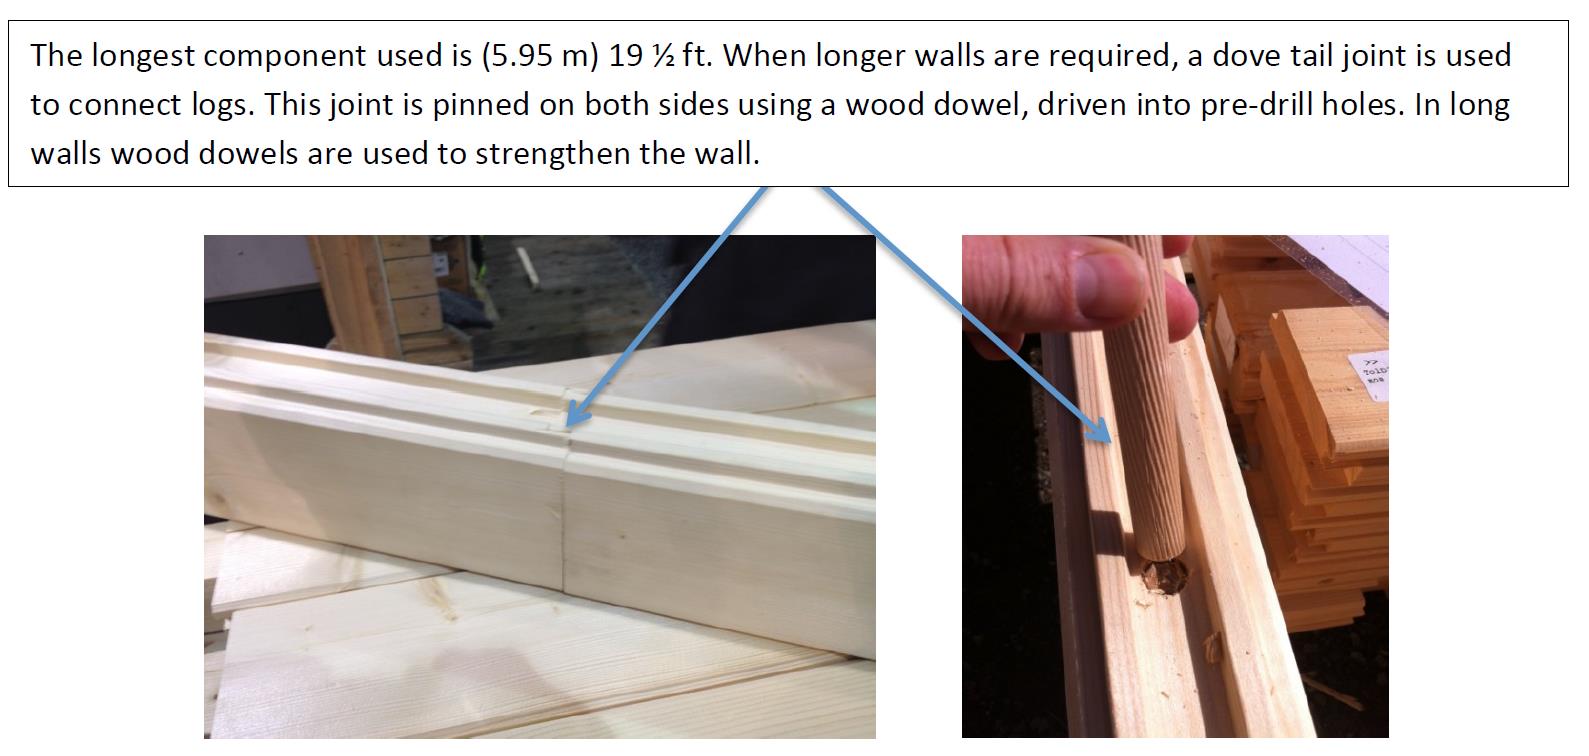 Length of wall logs